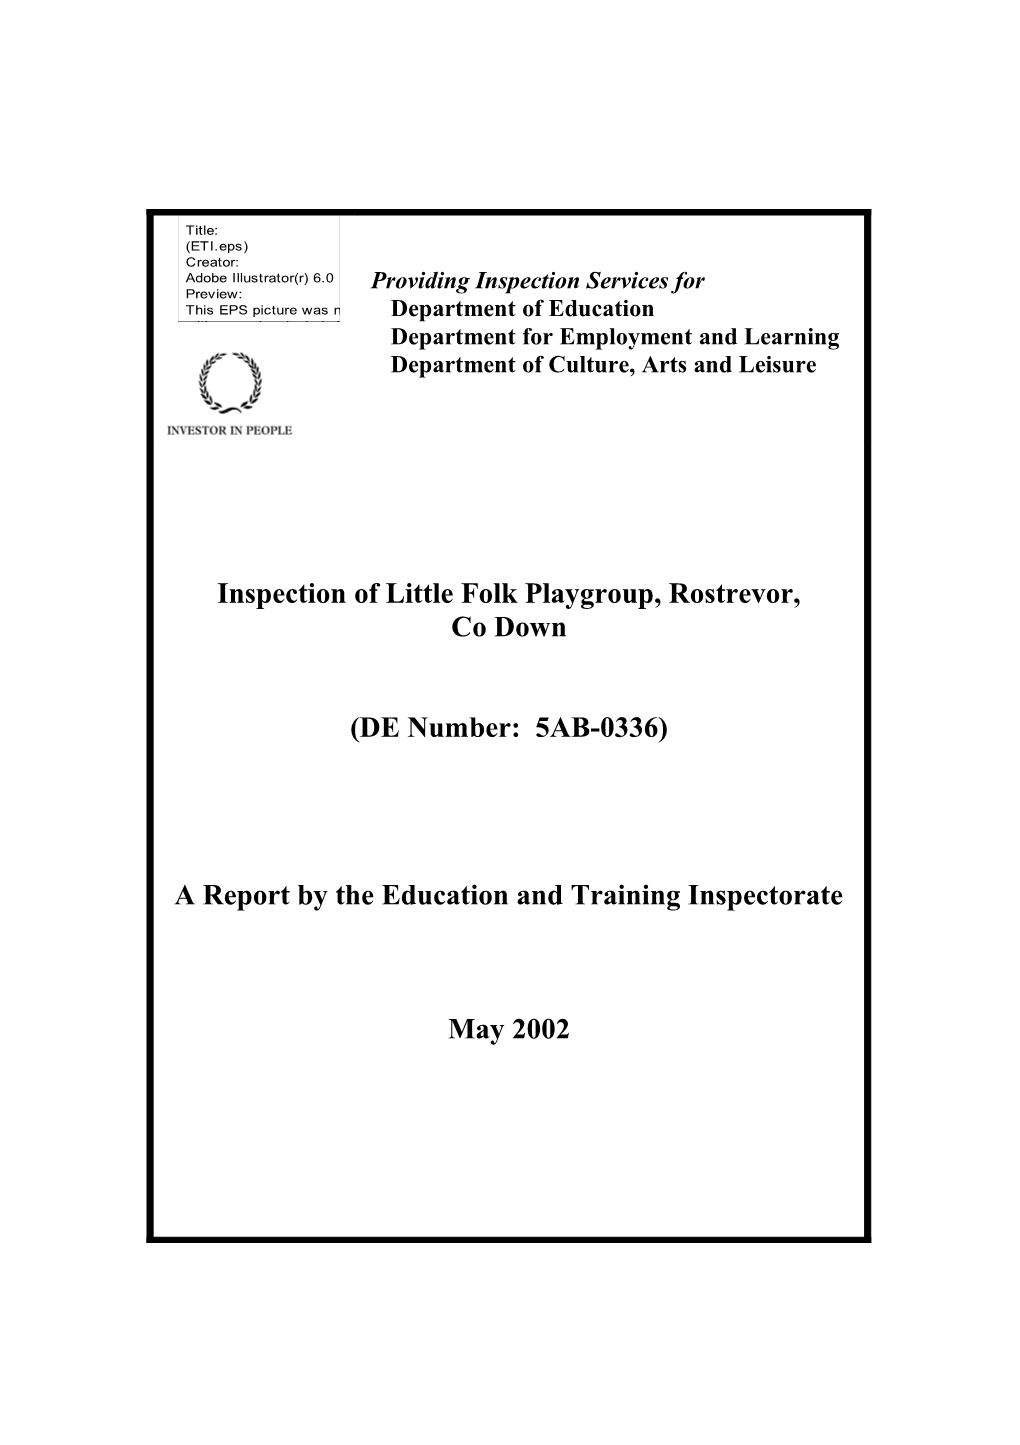 Report on the Inspection of Little Folk Playgroup, Rostrevor, Co